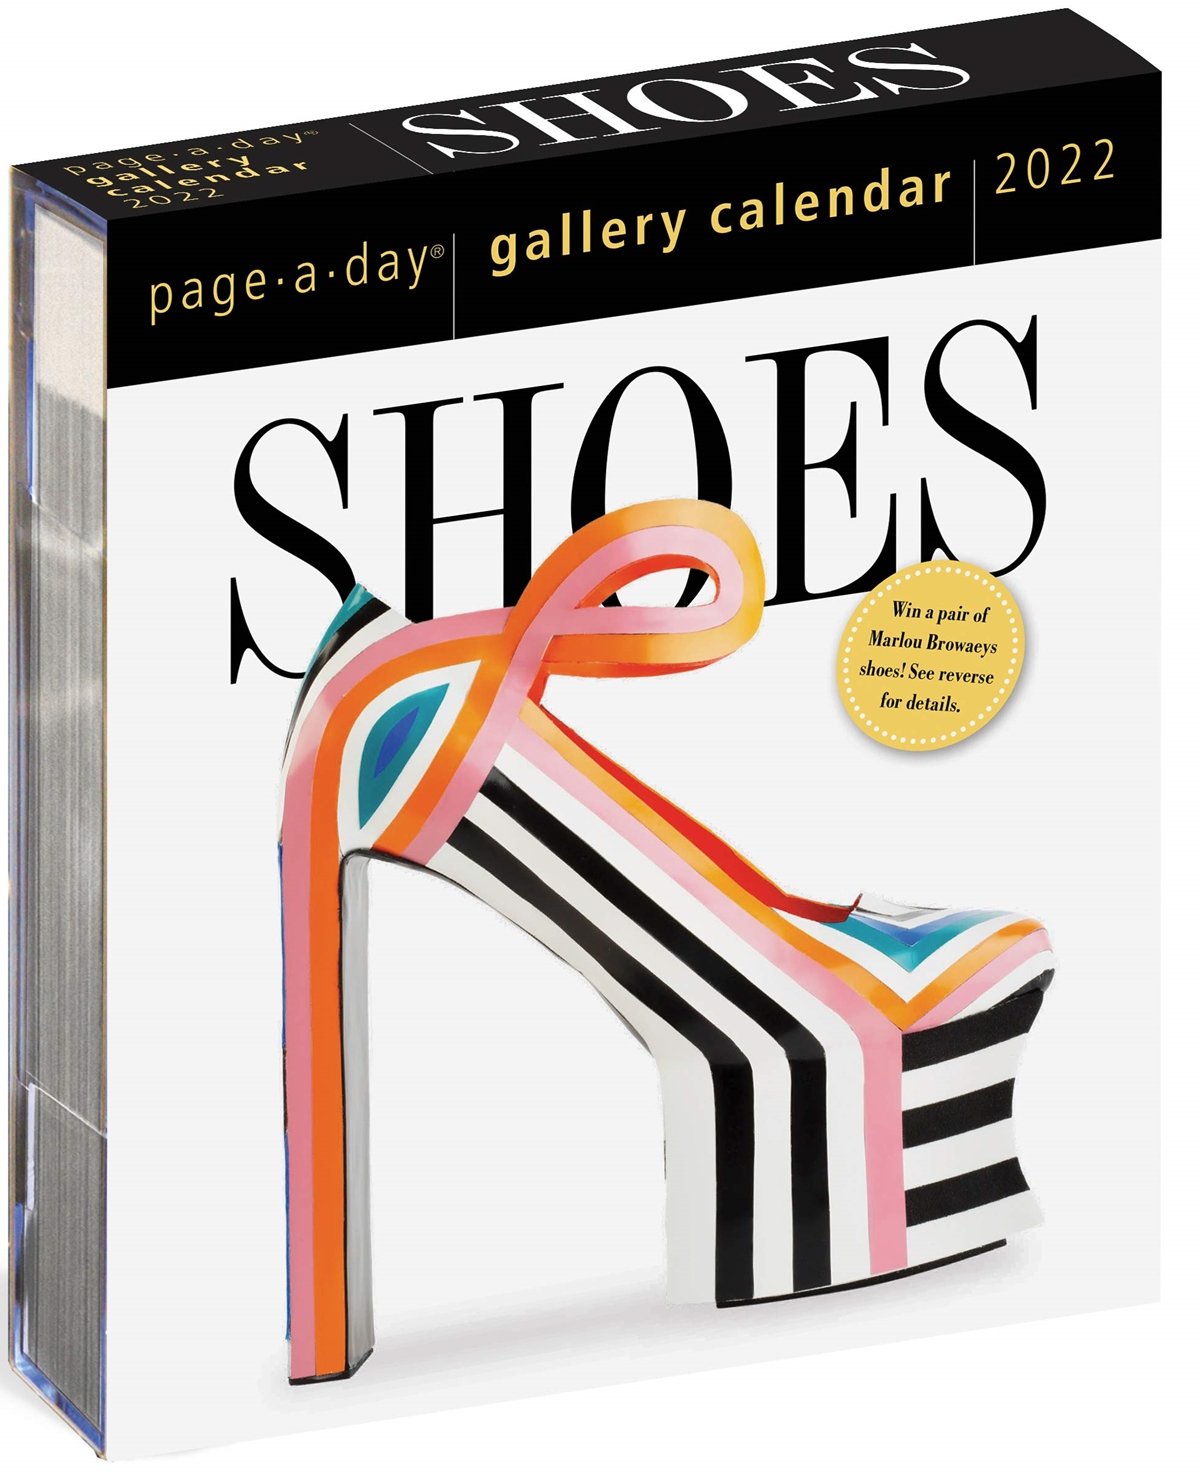 This shoe calendar revels in fabulous, imaginative, covetable shoes